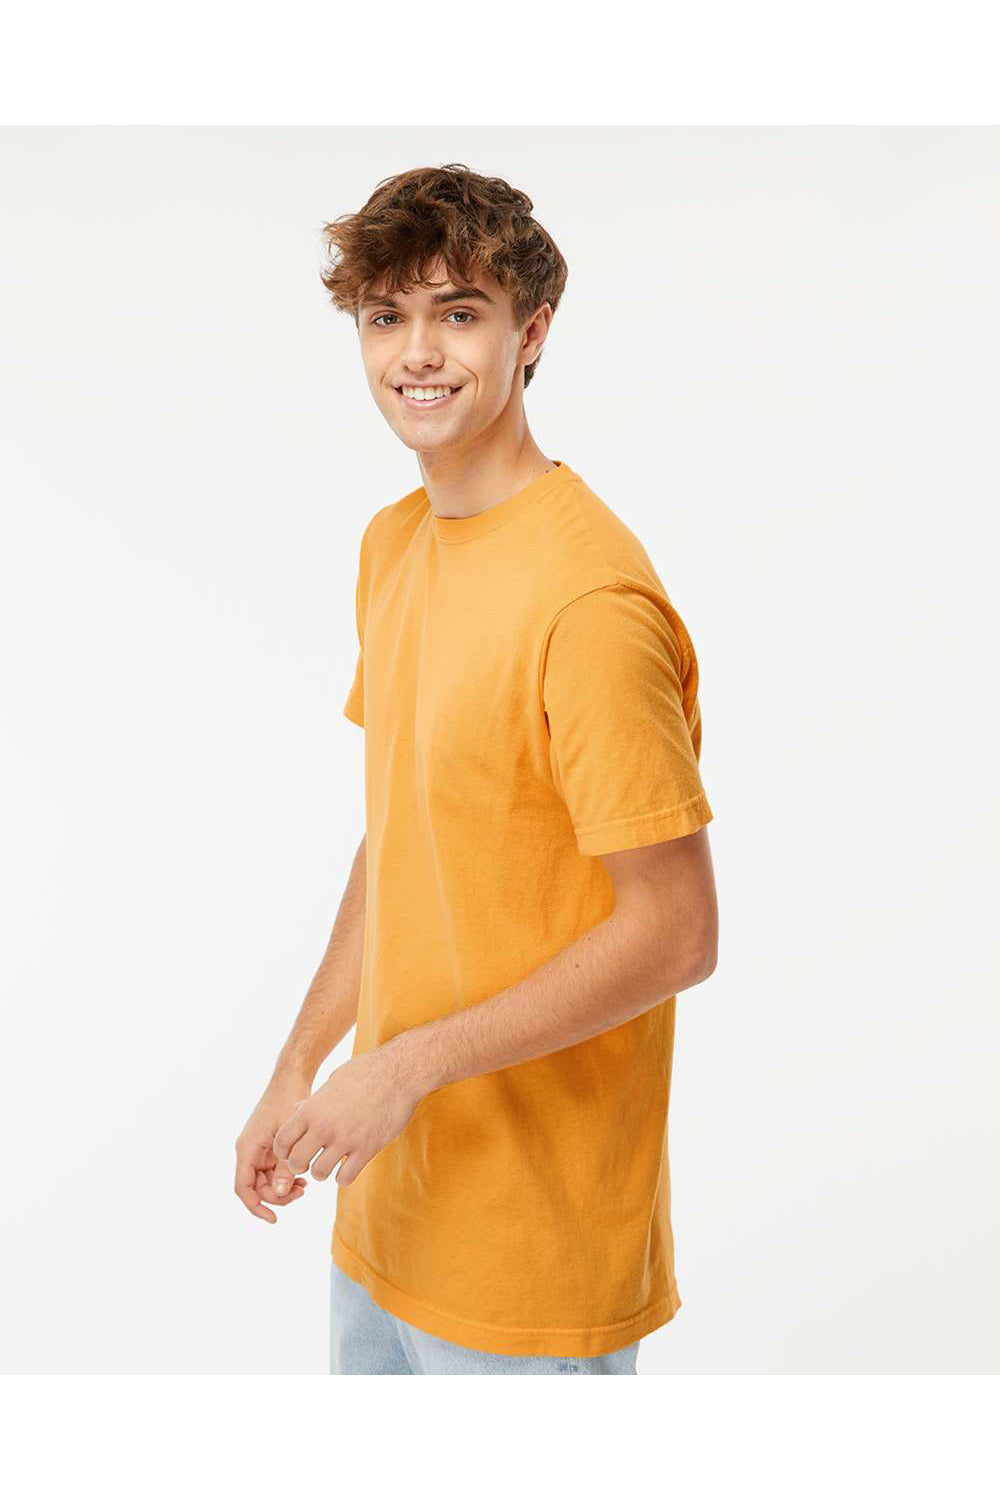 M&O 6500M Mens Vintage Garment Dyed Short Sleeve Crewneck T-Shirt Citrus Yellow Model Side